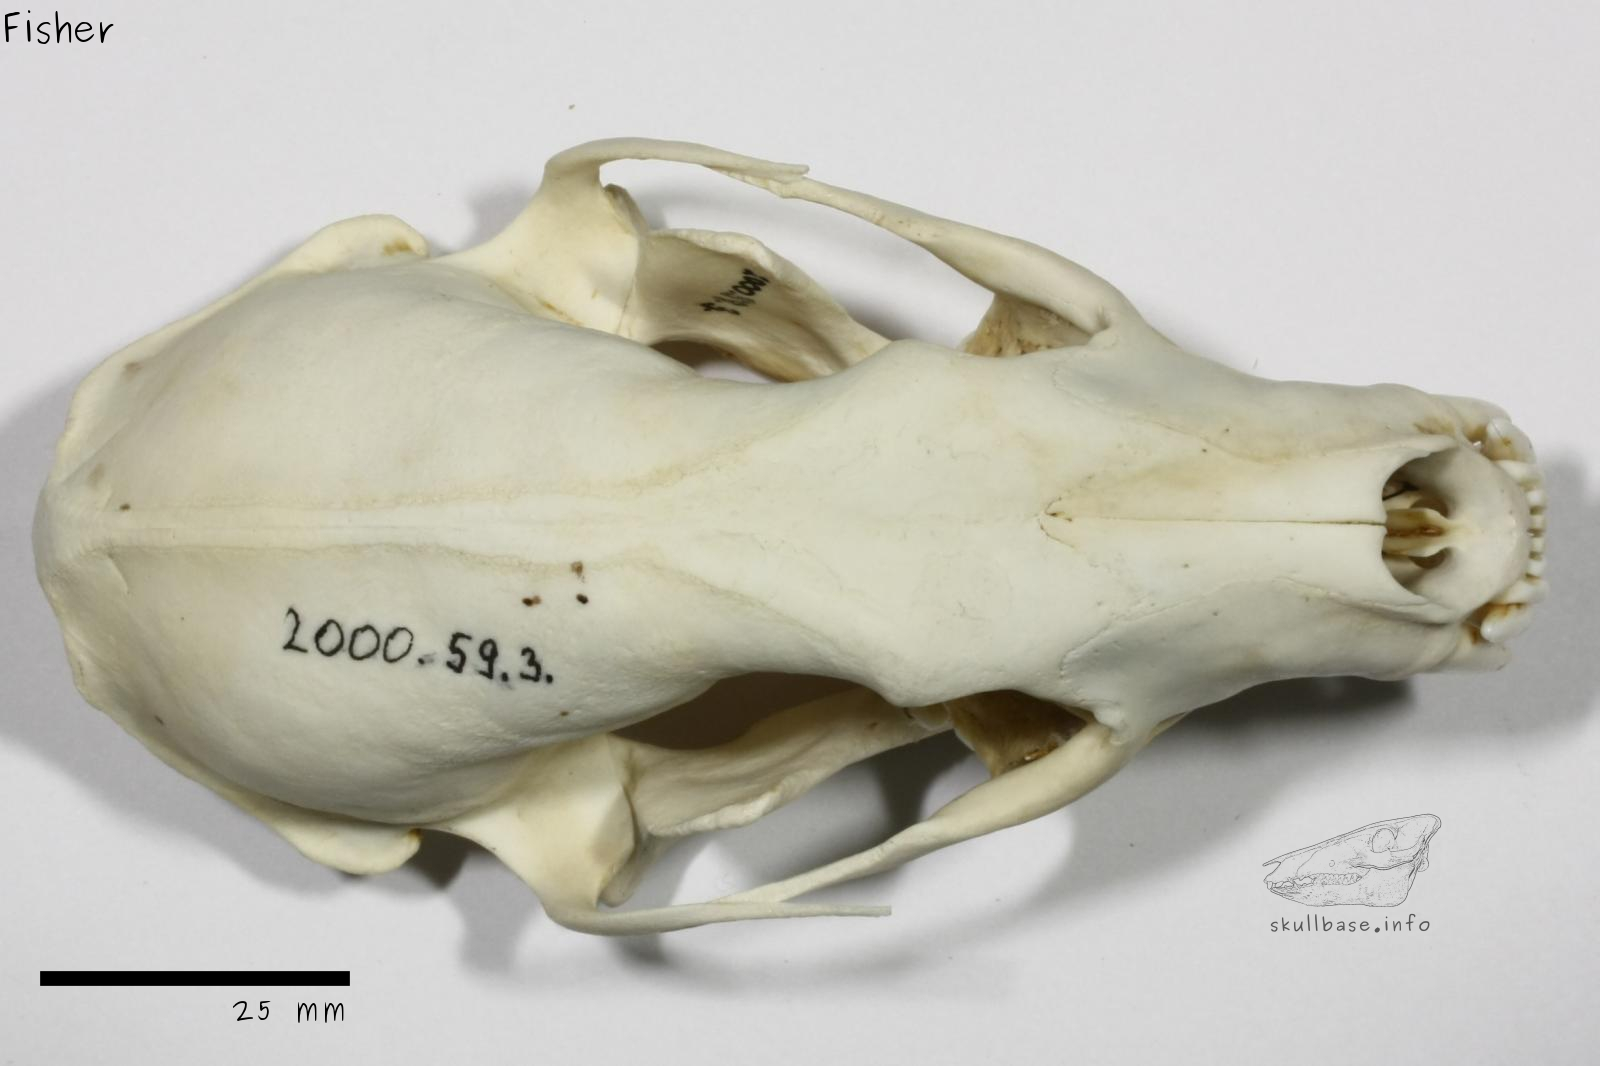 Fisher (Pekania pennanti) skull dorsal view